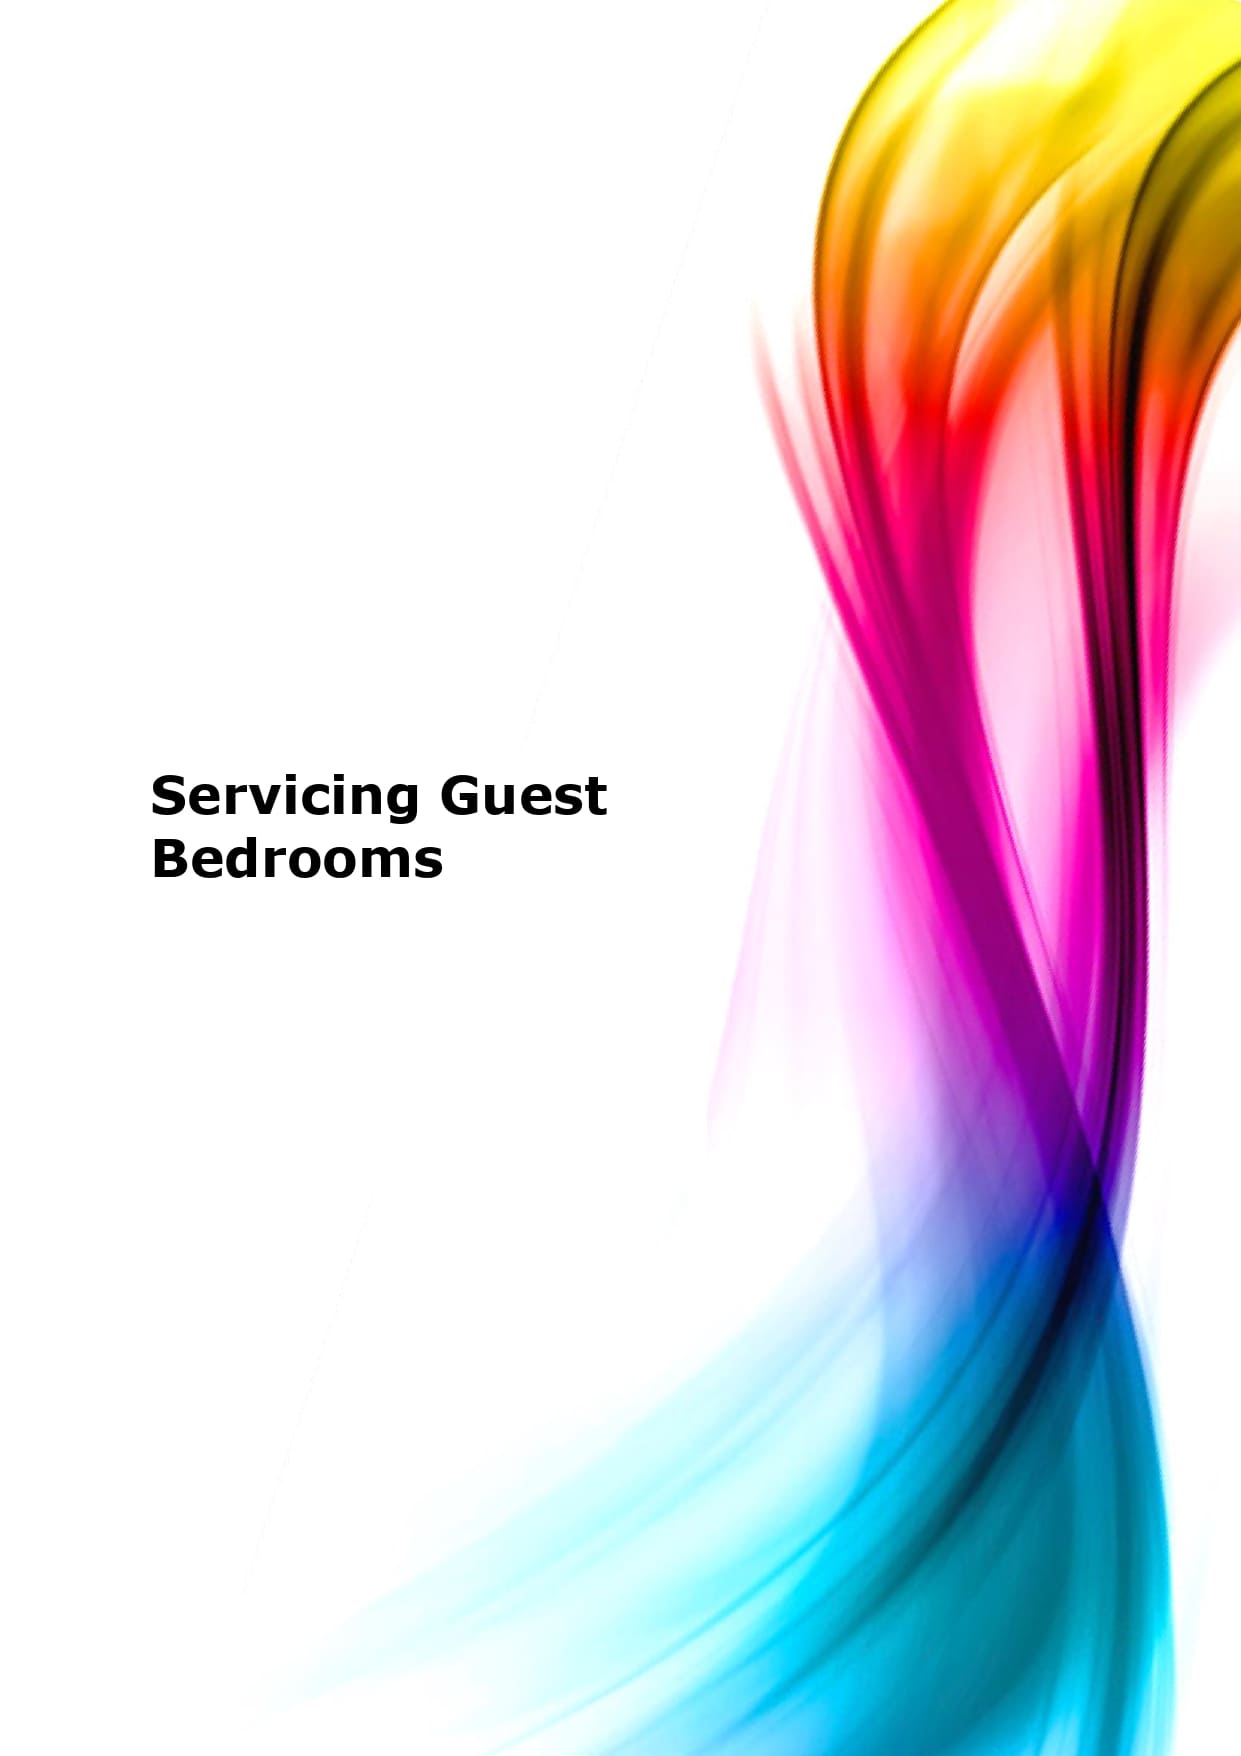 Servicing guest bedrooms